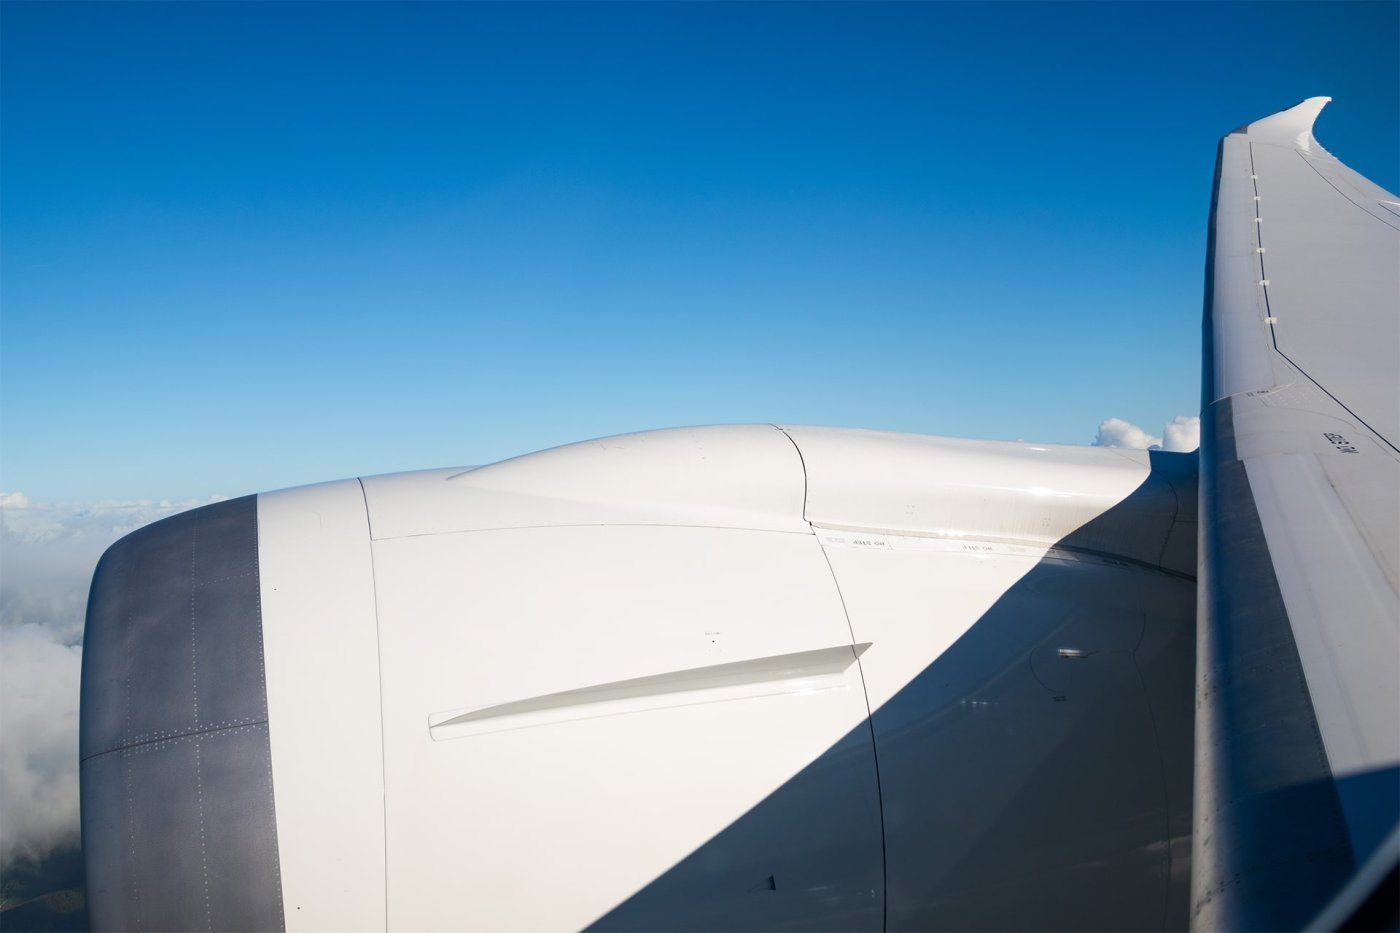 Flight review: Lufthansa from Munich to Frankfurt in Premium Eco